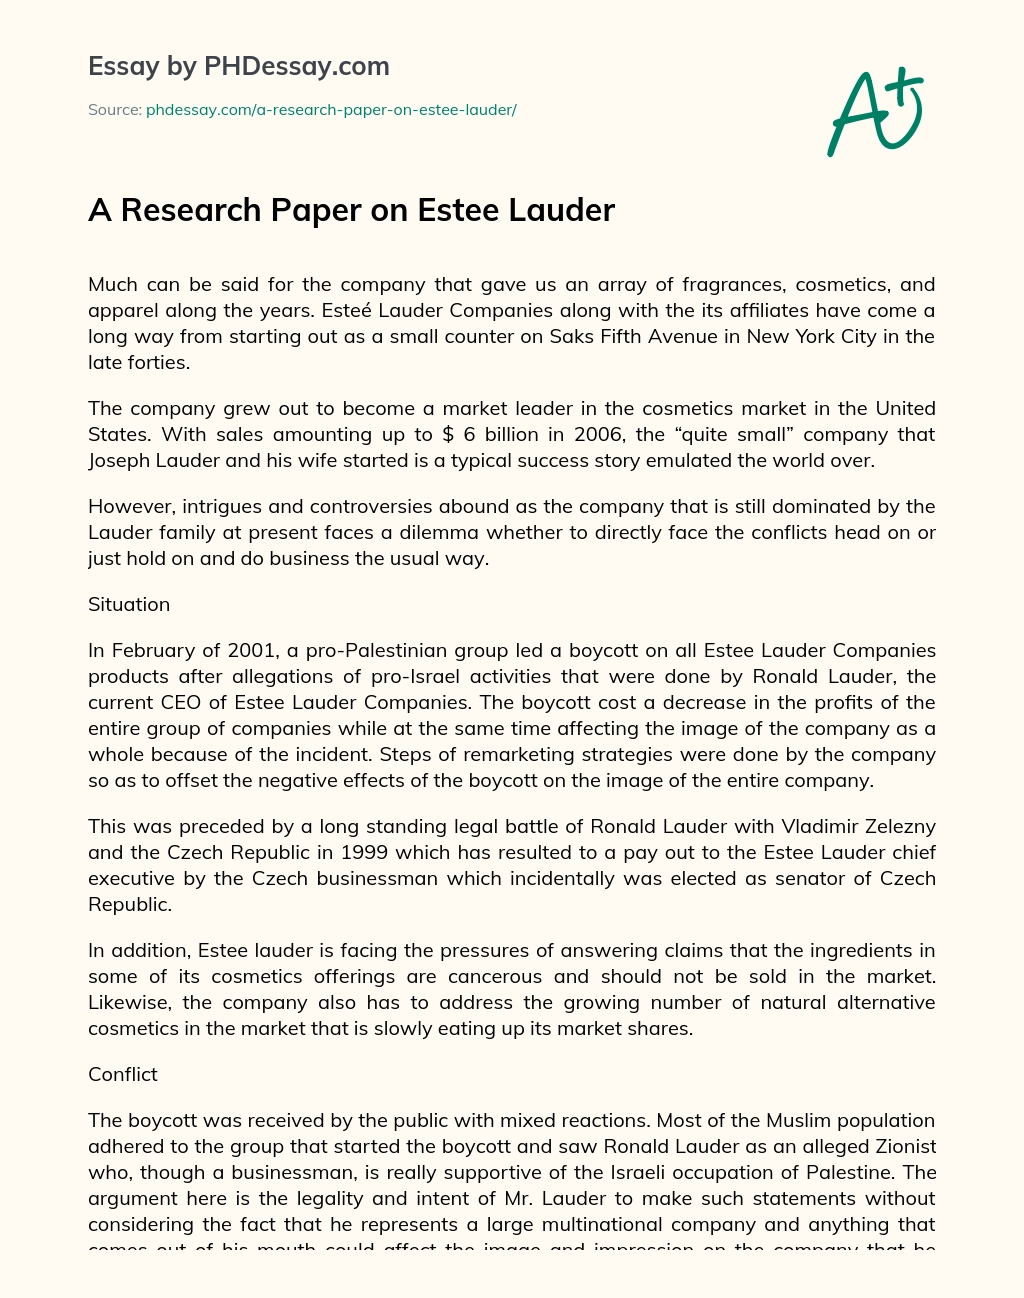 A Research Paper on Estee Lauder essay